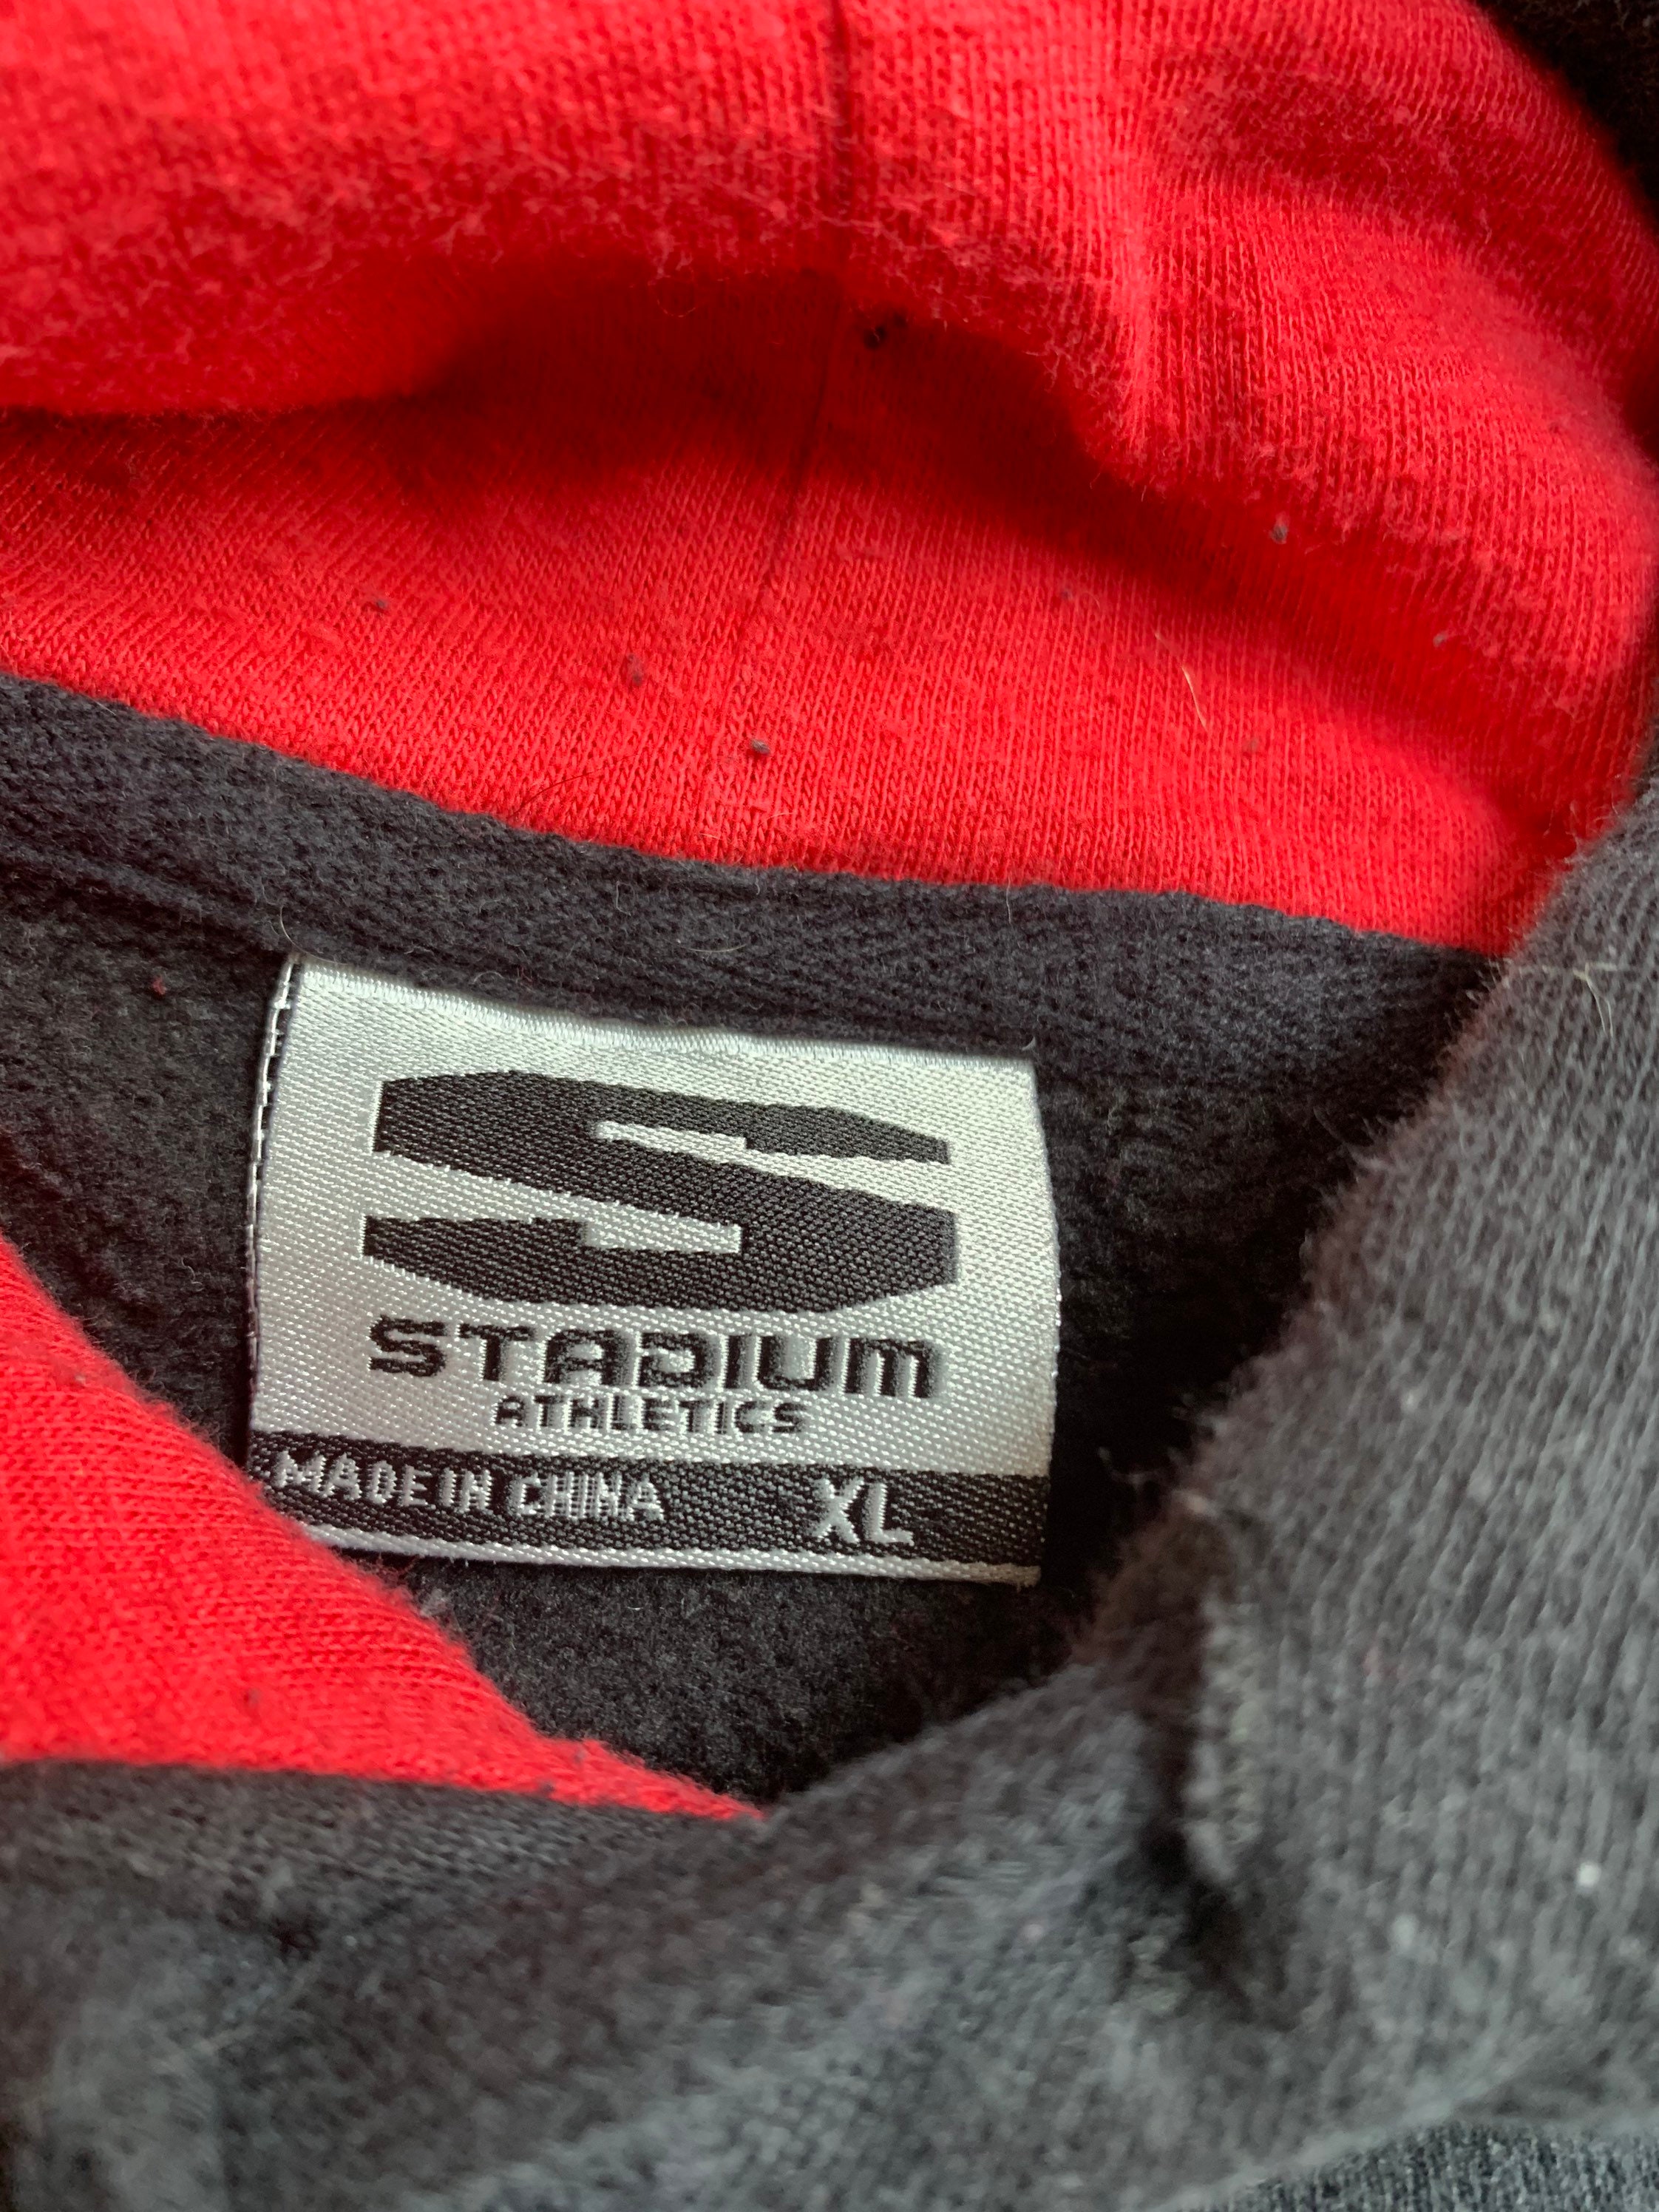 Louisville Cardinals Hoodie Sweatshirt Size XL Quality -  Norway